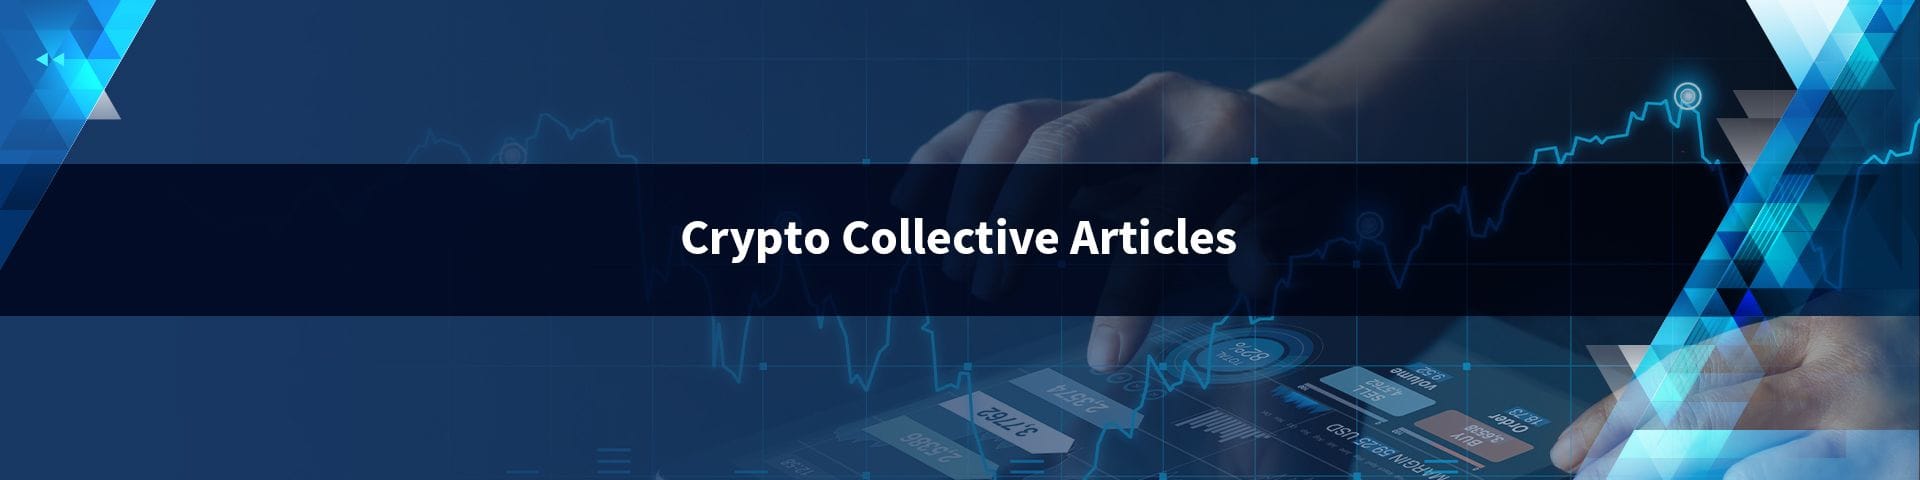 Launch of Finexia Crypto Collective